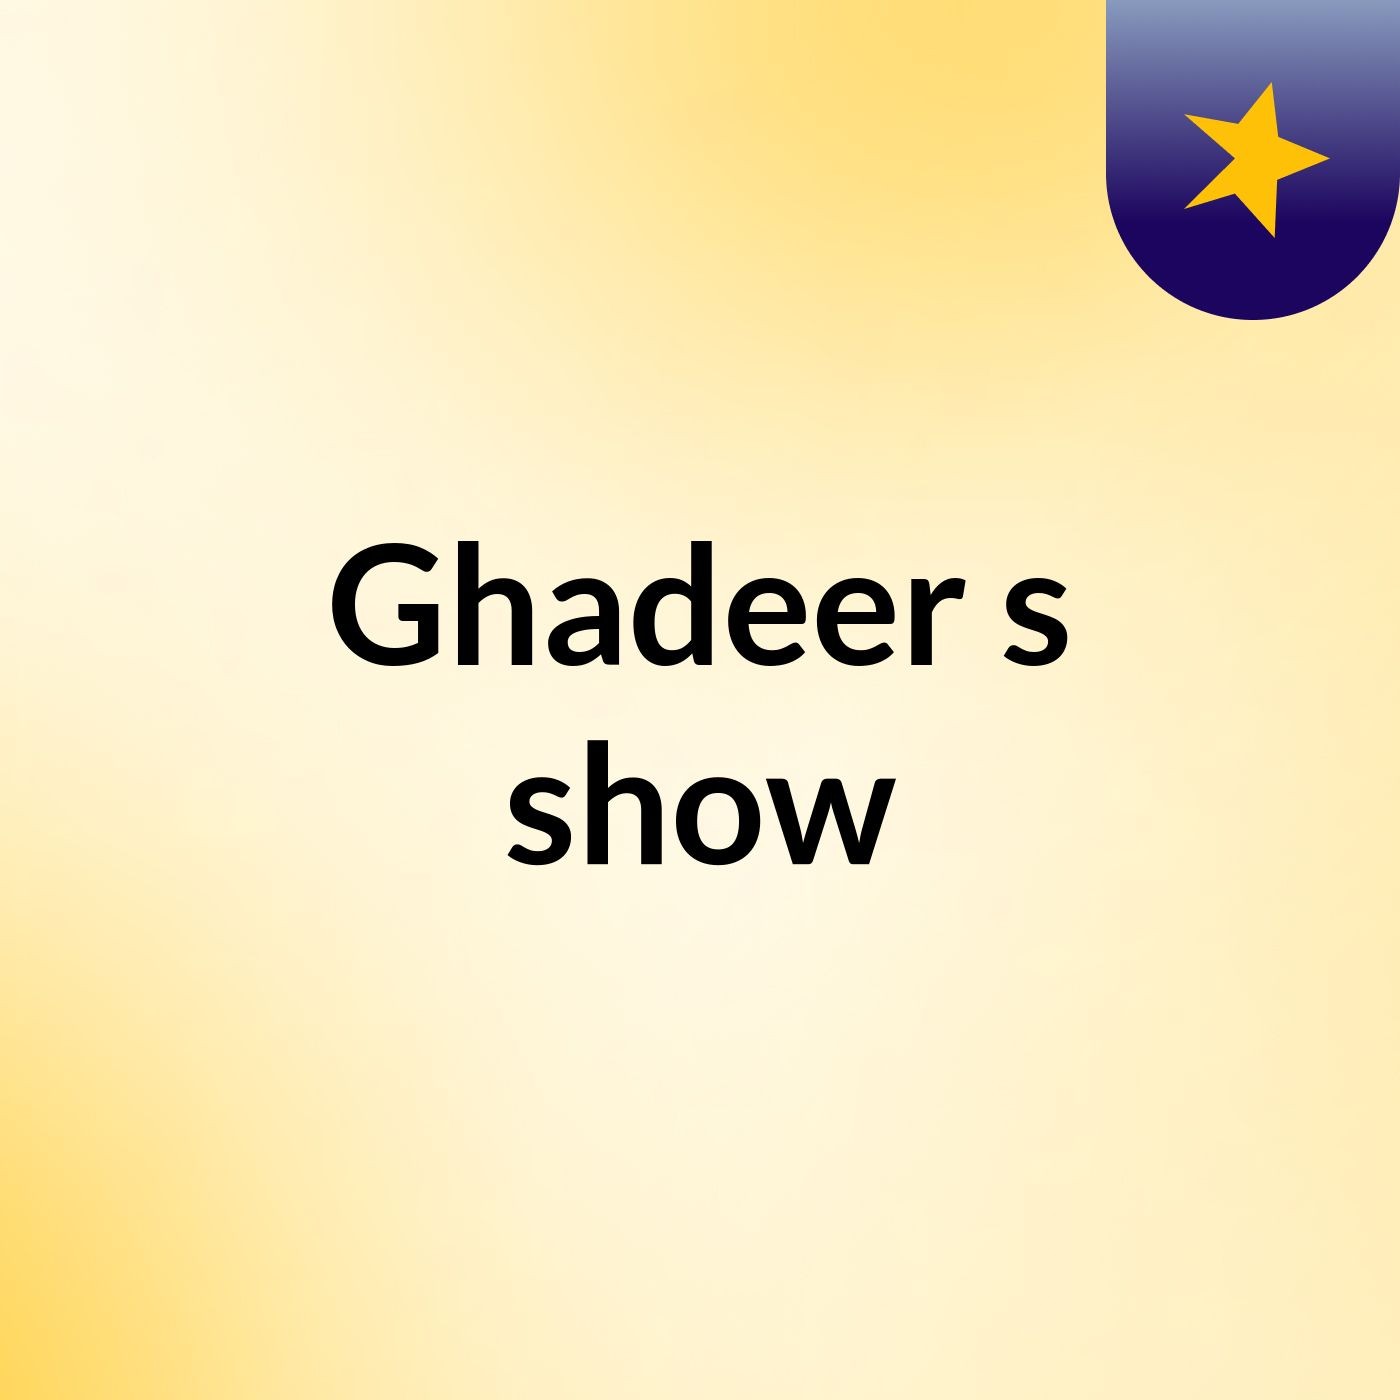 Ghadeer's show